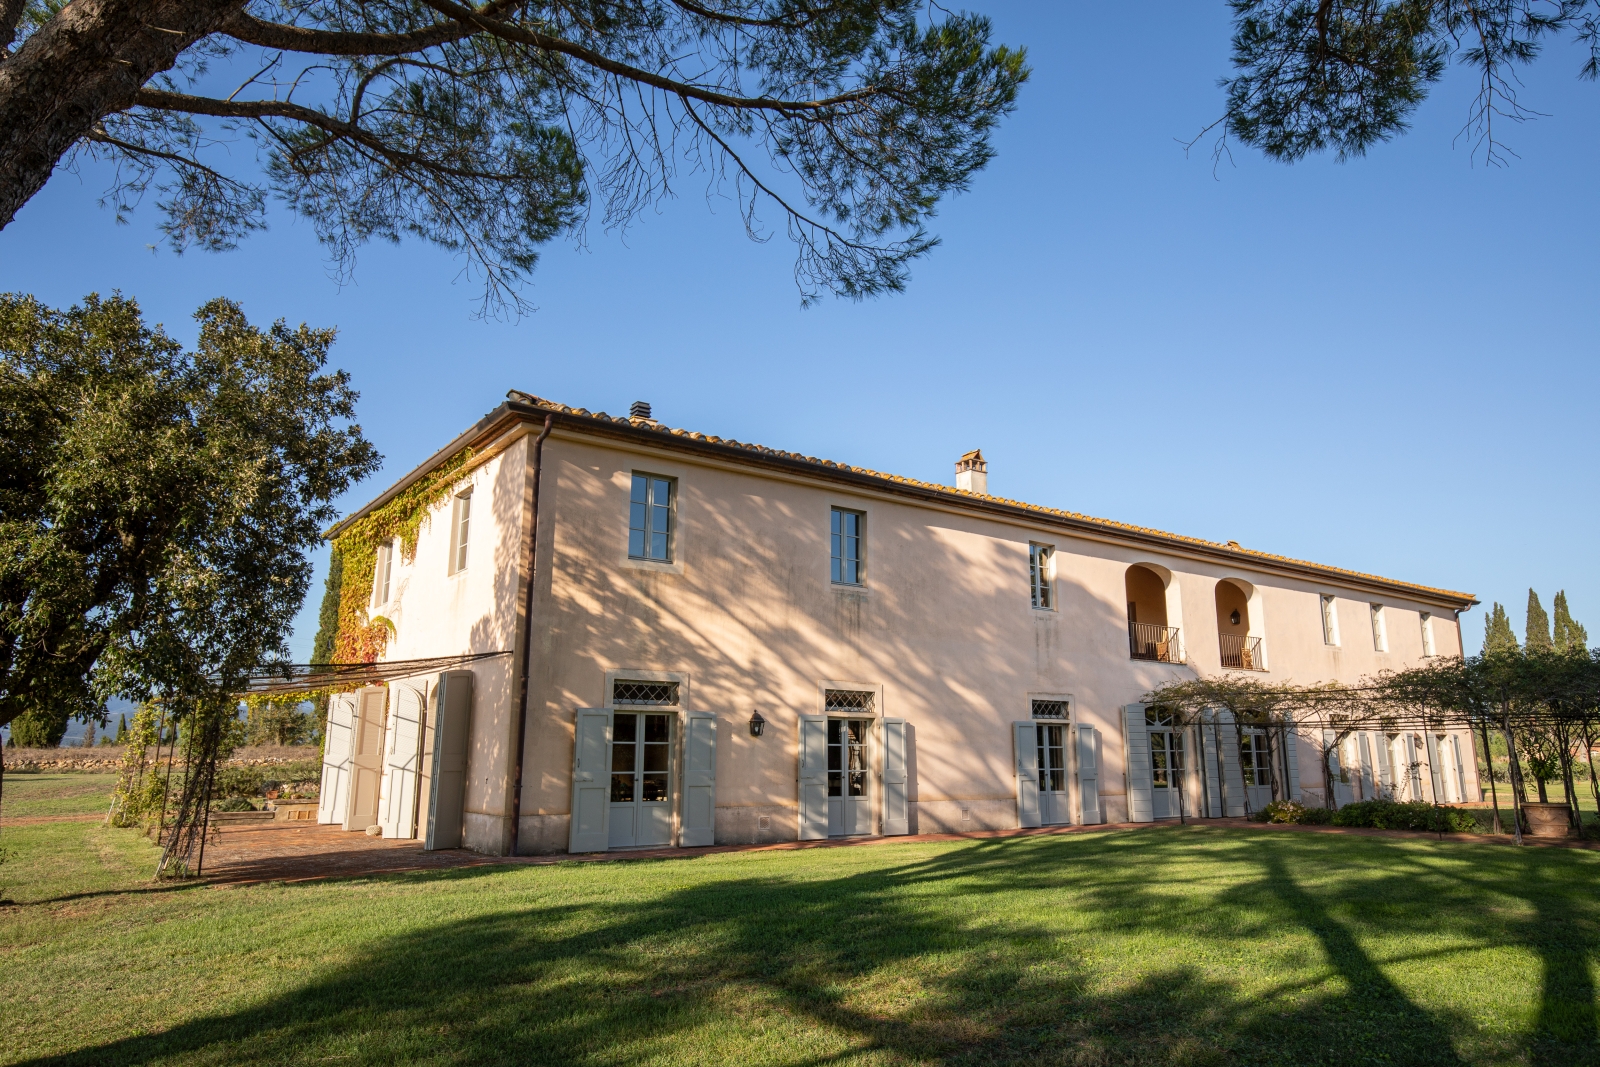 Exterior view of La Vigna villa in Tuscany Italy